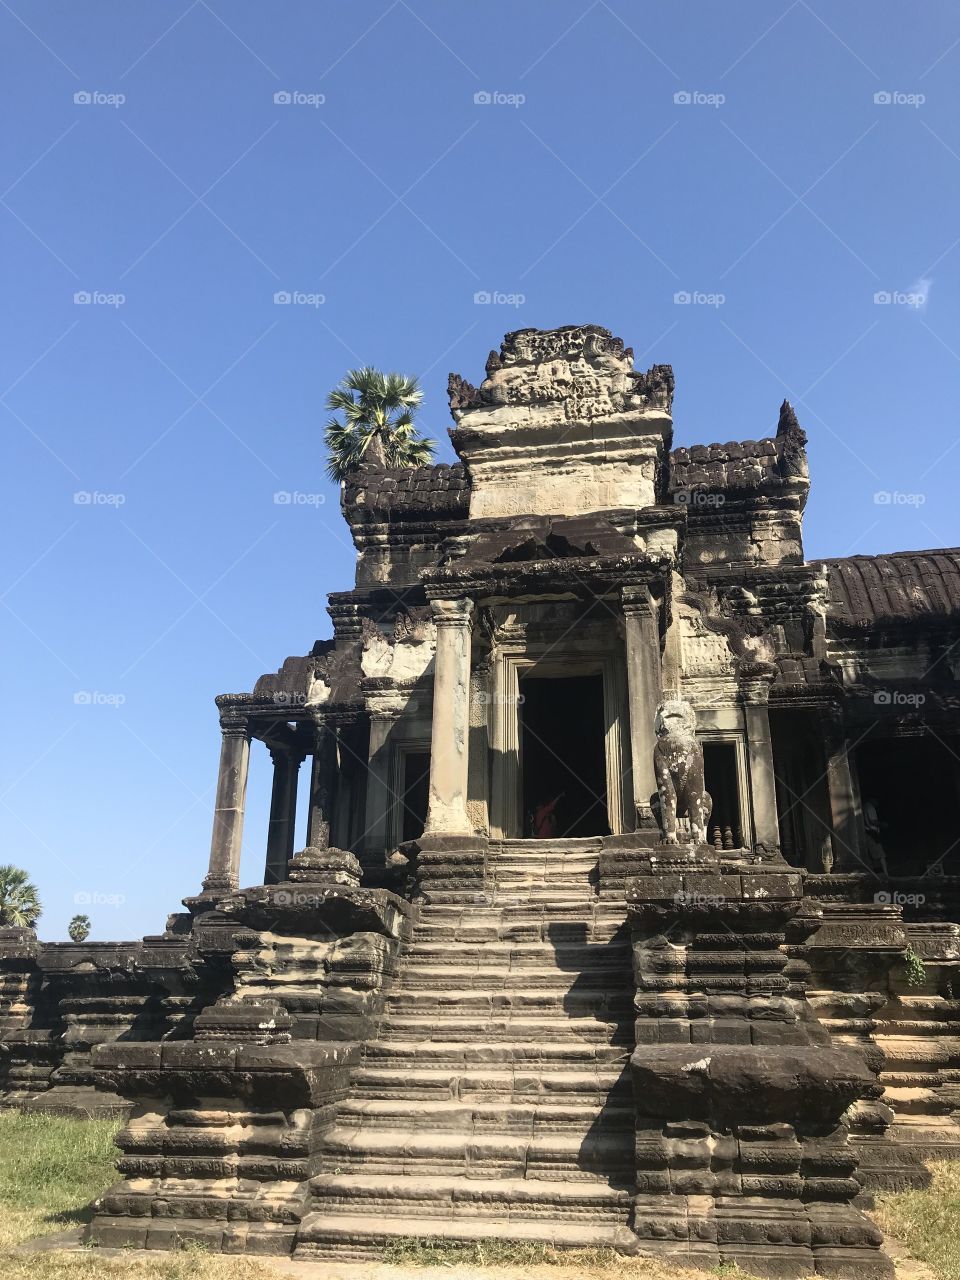 Temple in Angkor Wat, Cambodia 